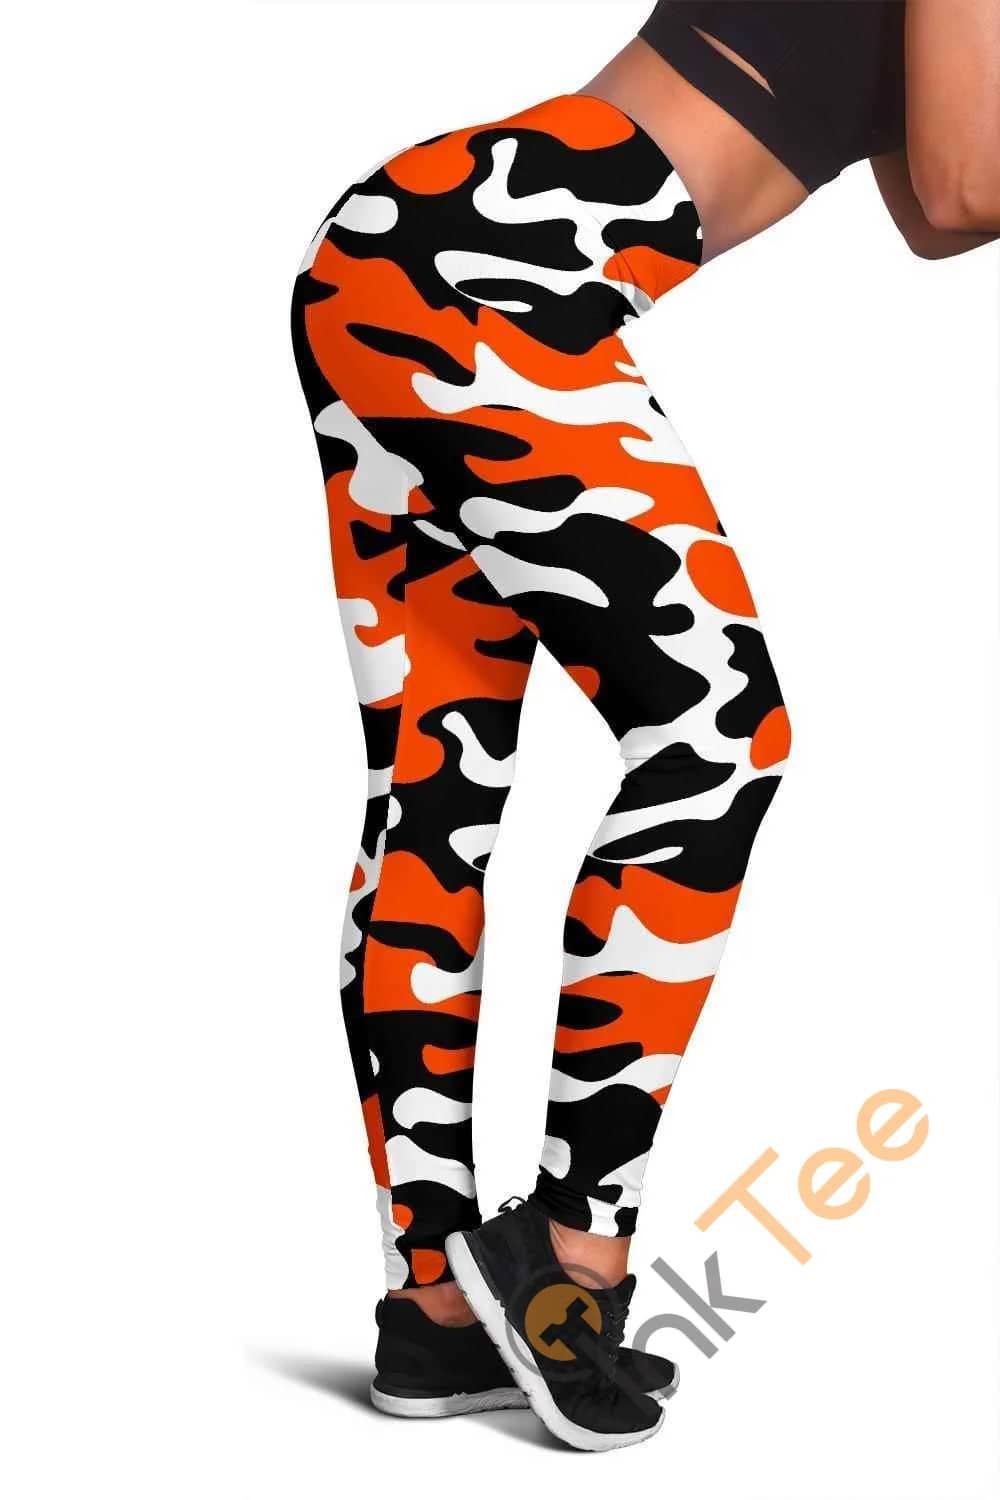 Cincinnati Bengals Inspired Tru Camo 3D All Over Print For Yoga Fitness Fashion Women'S Leggings